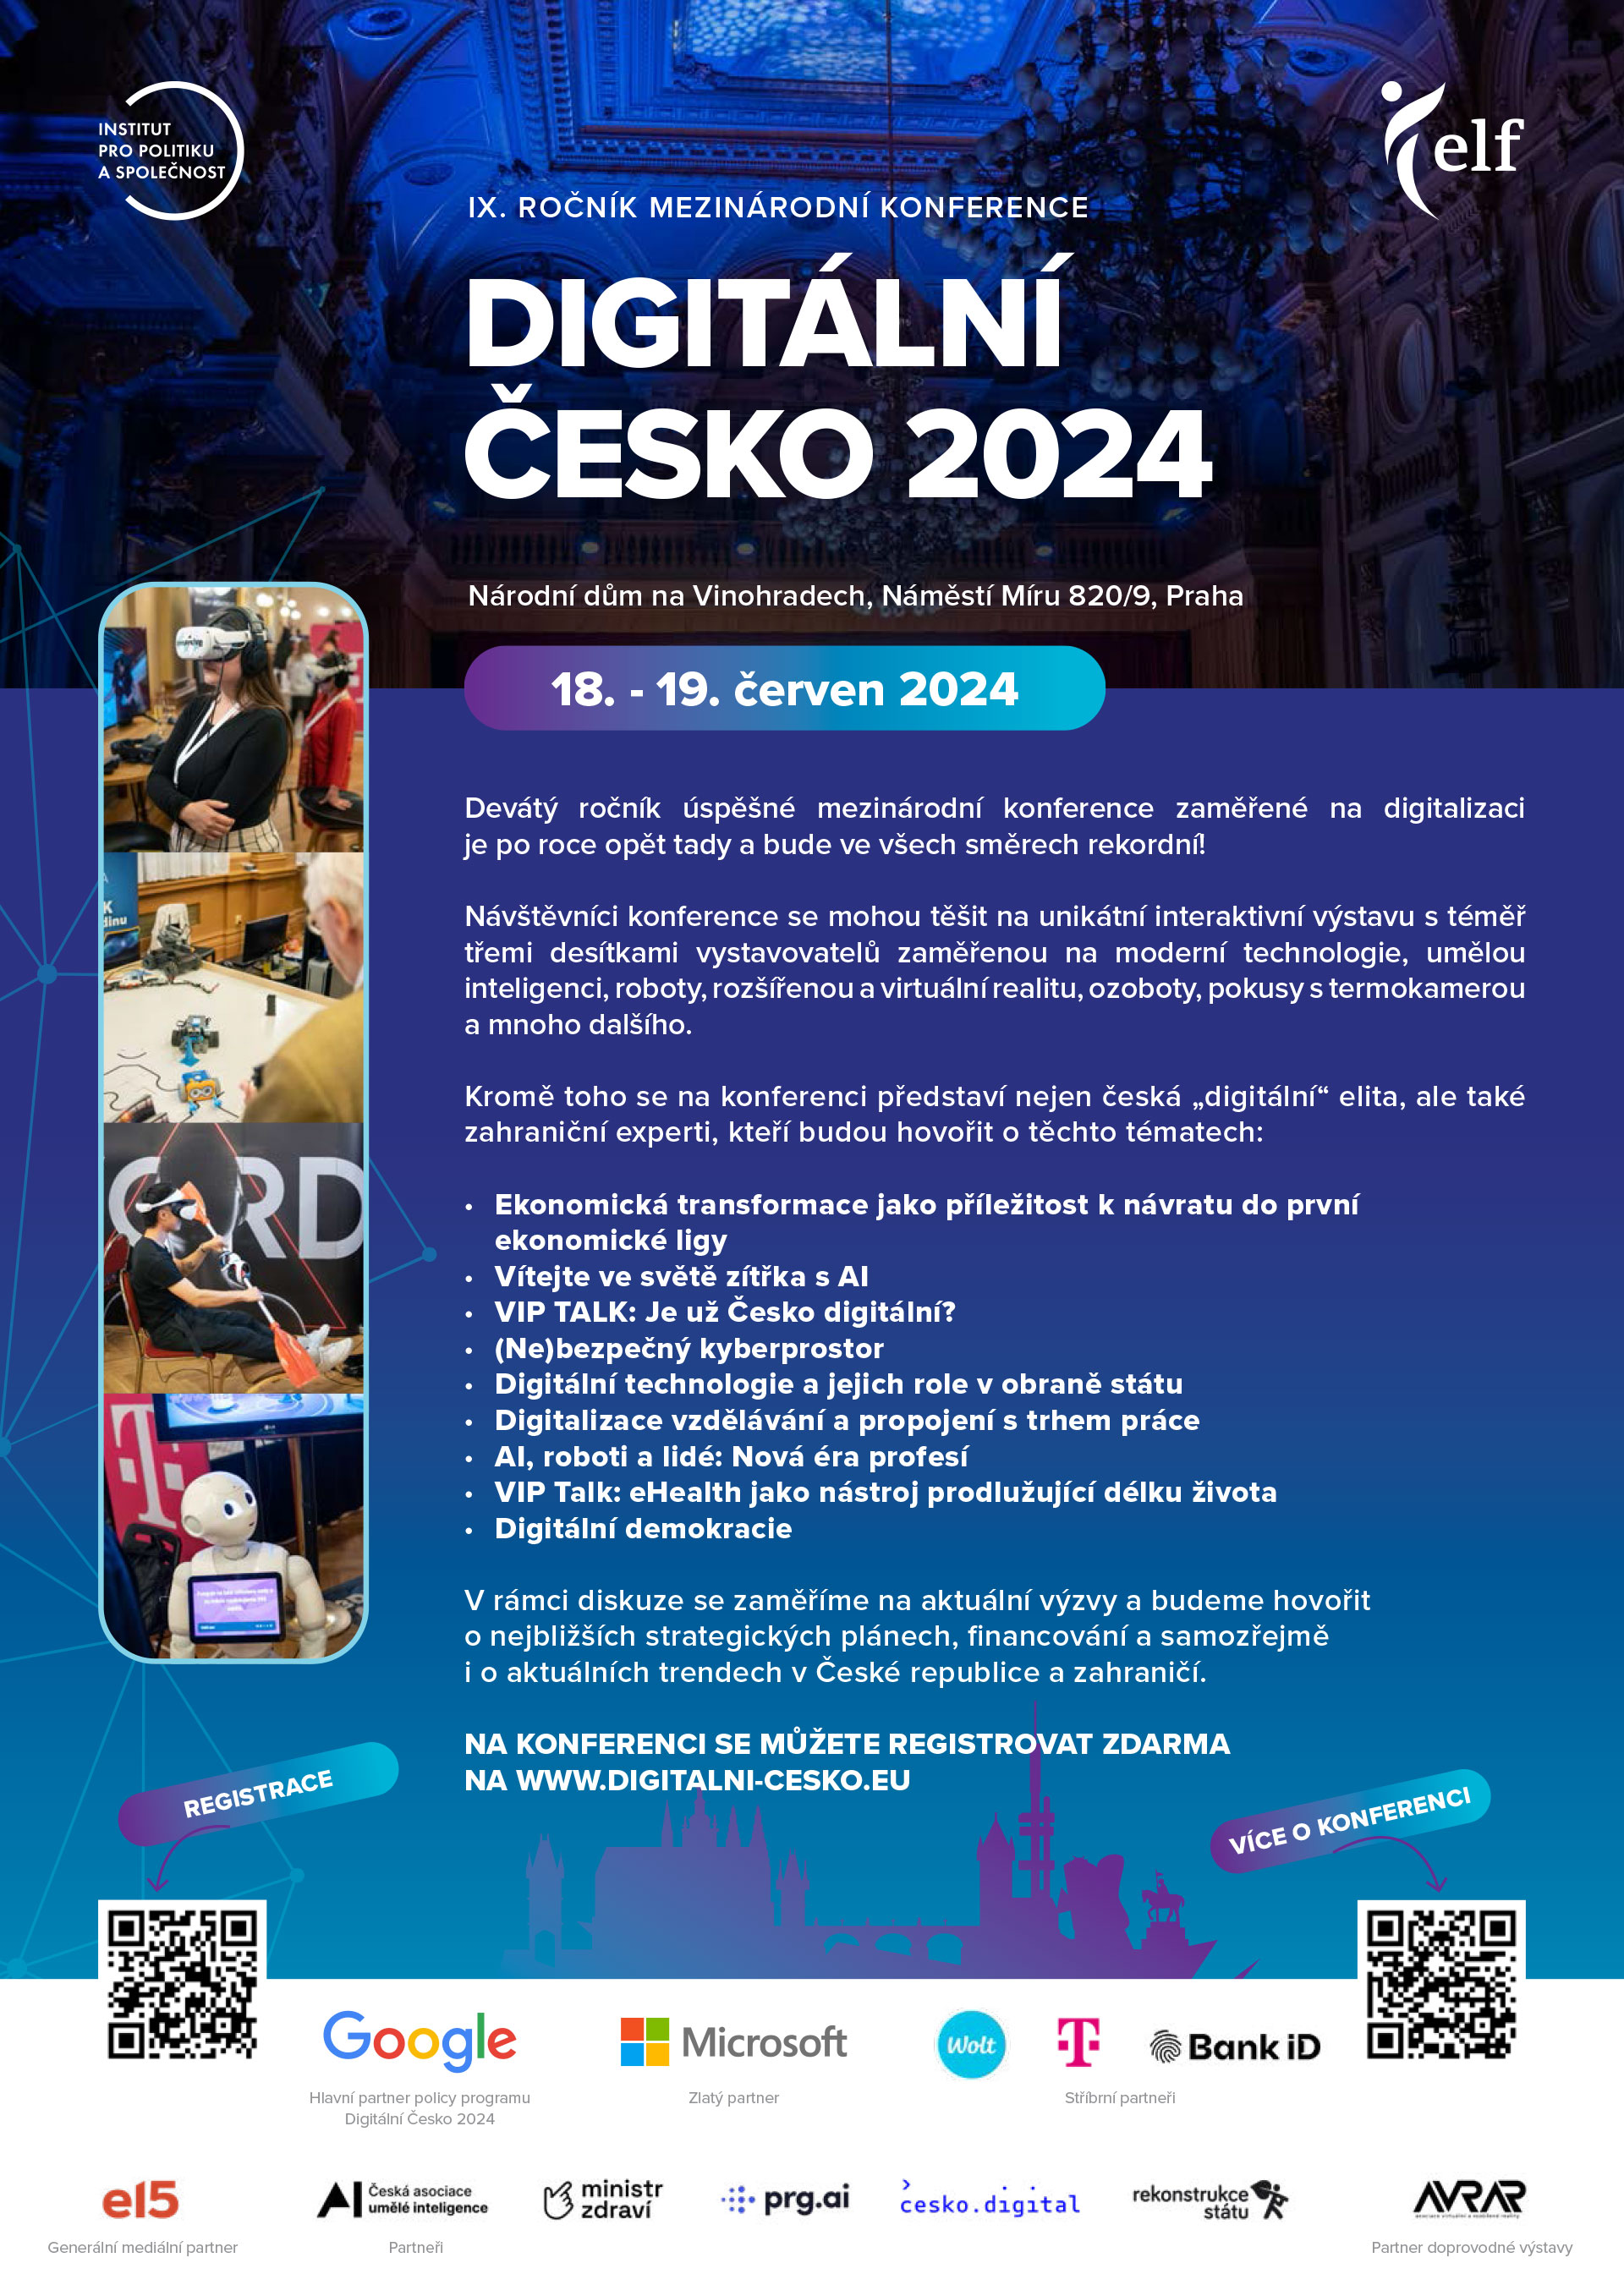 Digital Czech Republic 2024 - Vrgineers.com